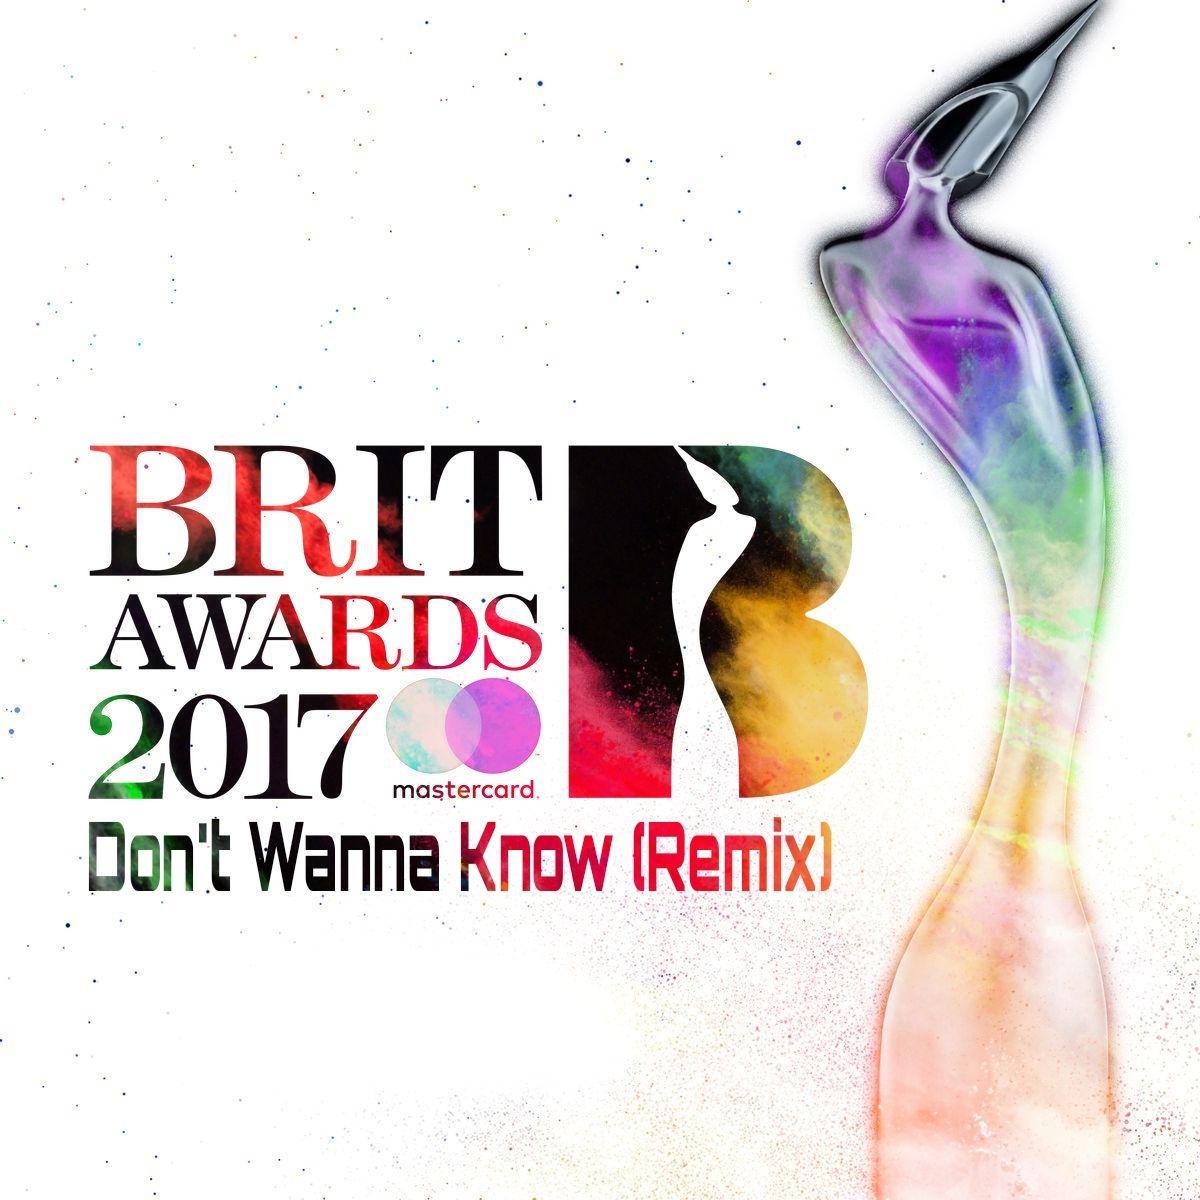 DJSseven77 - Don't Wanna Know (Remix)